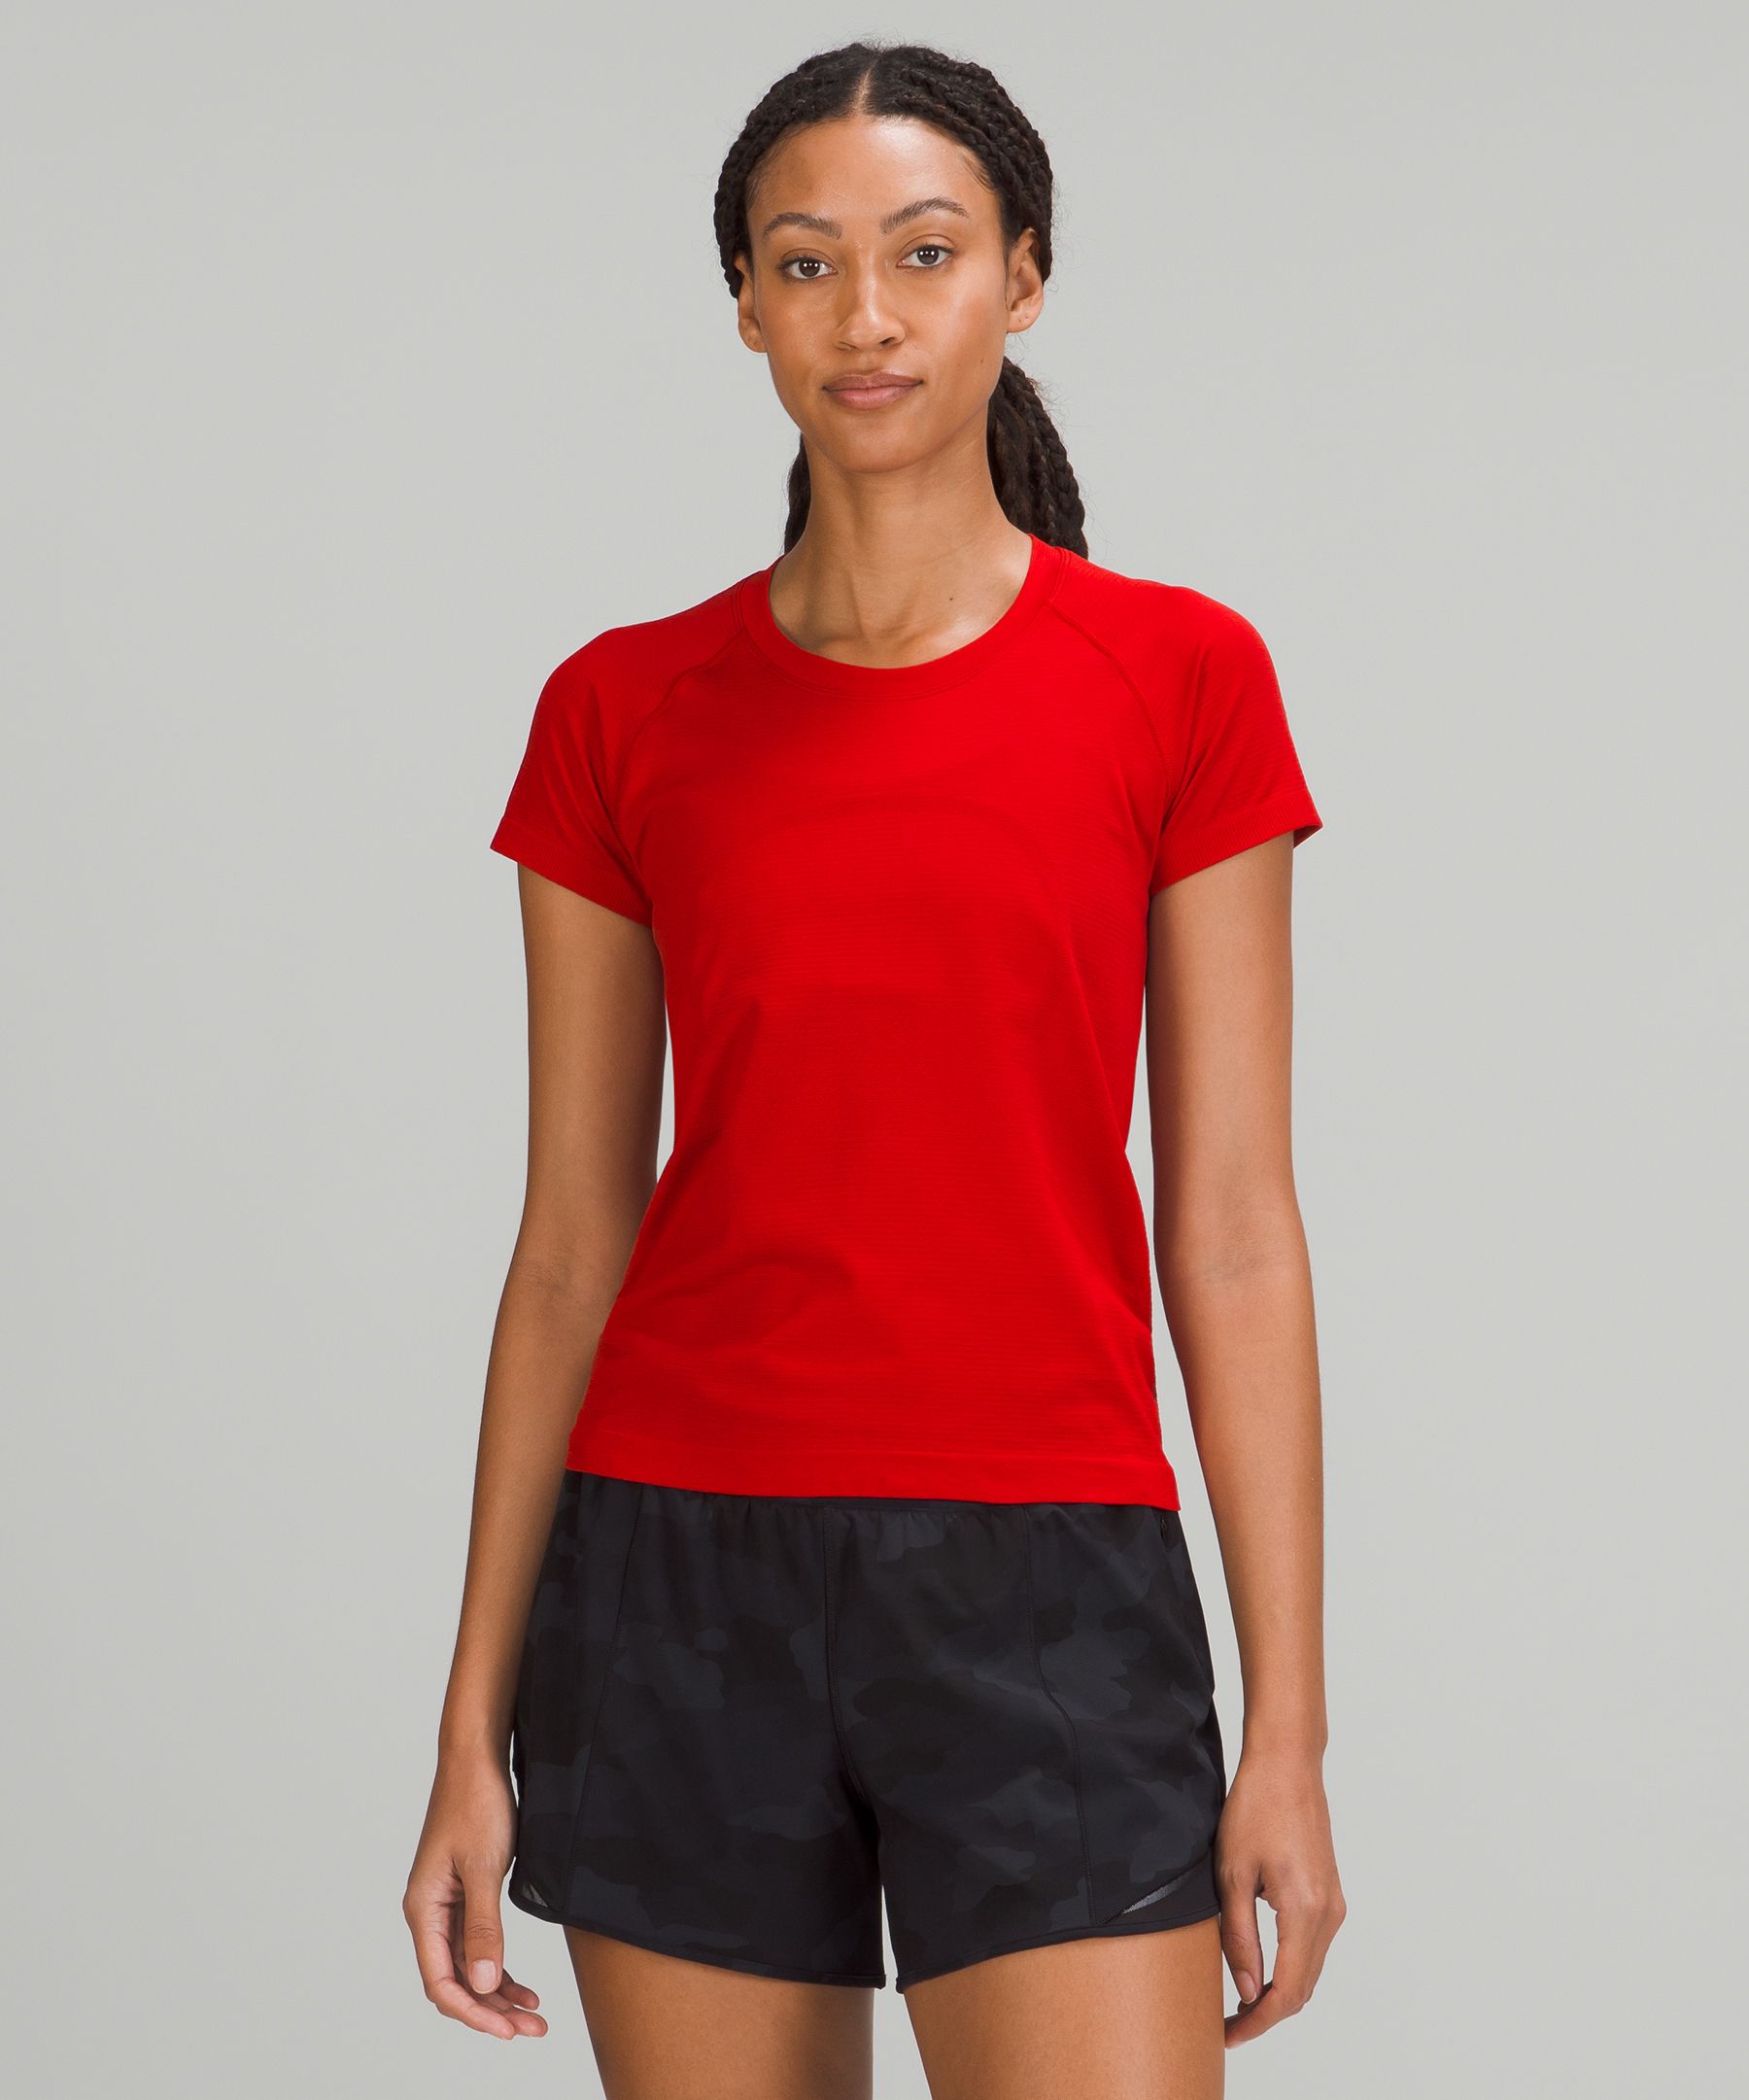 Lululemon Swiftly Tech Short-Sleeve Shirt 2.0 *Race Length